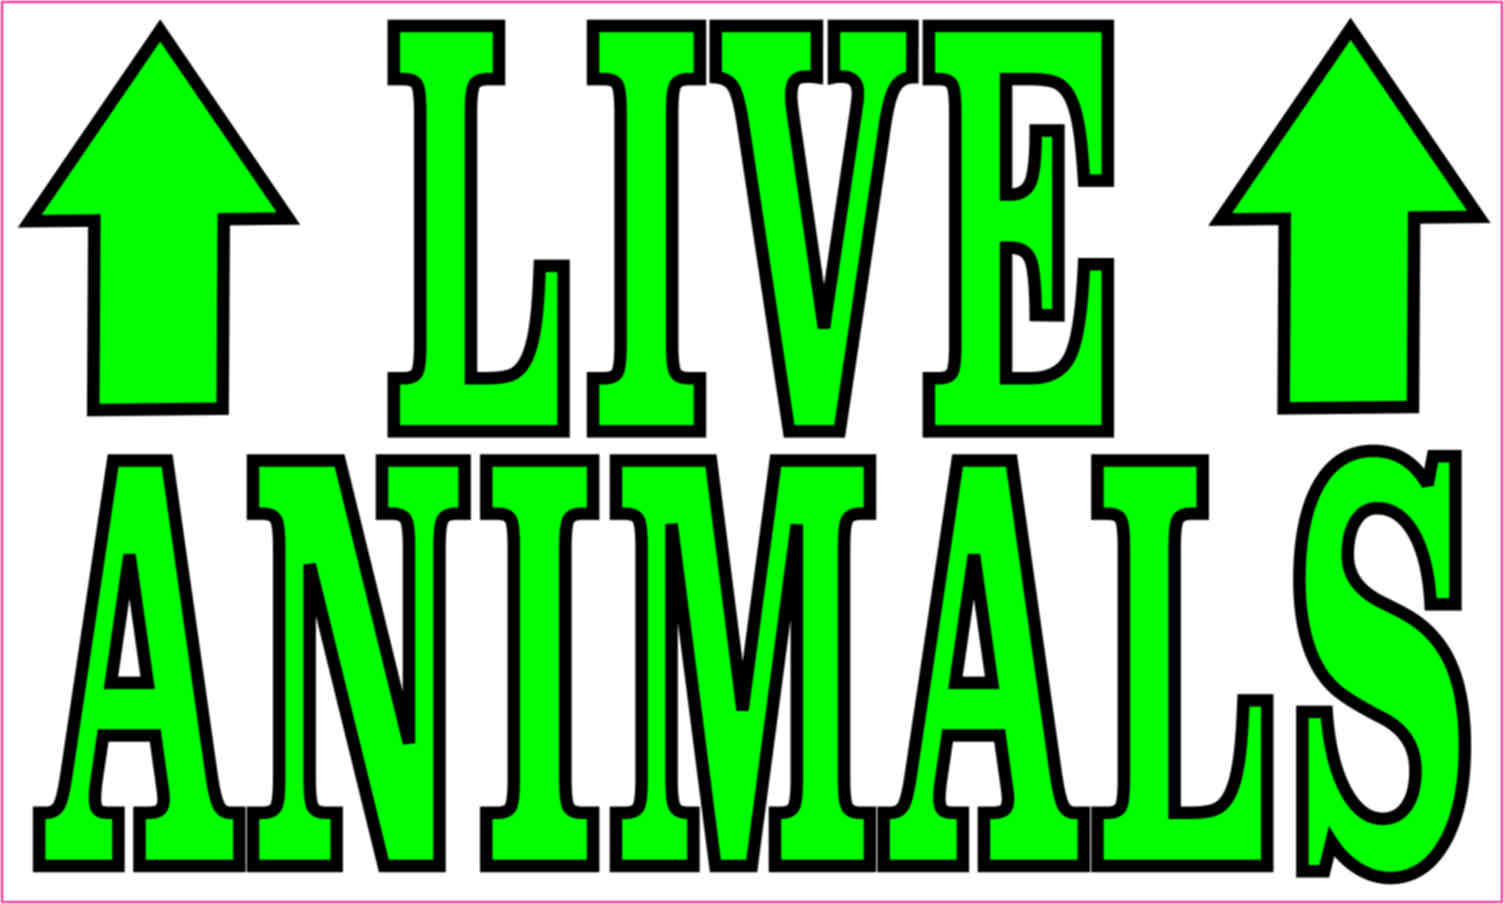 5in-x-3in-live-animals-sticker-vinyl-animal-sign-decal-transport